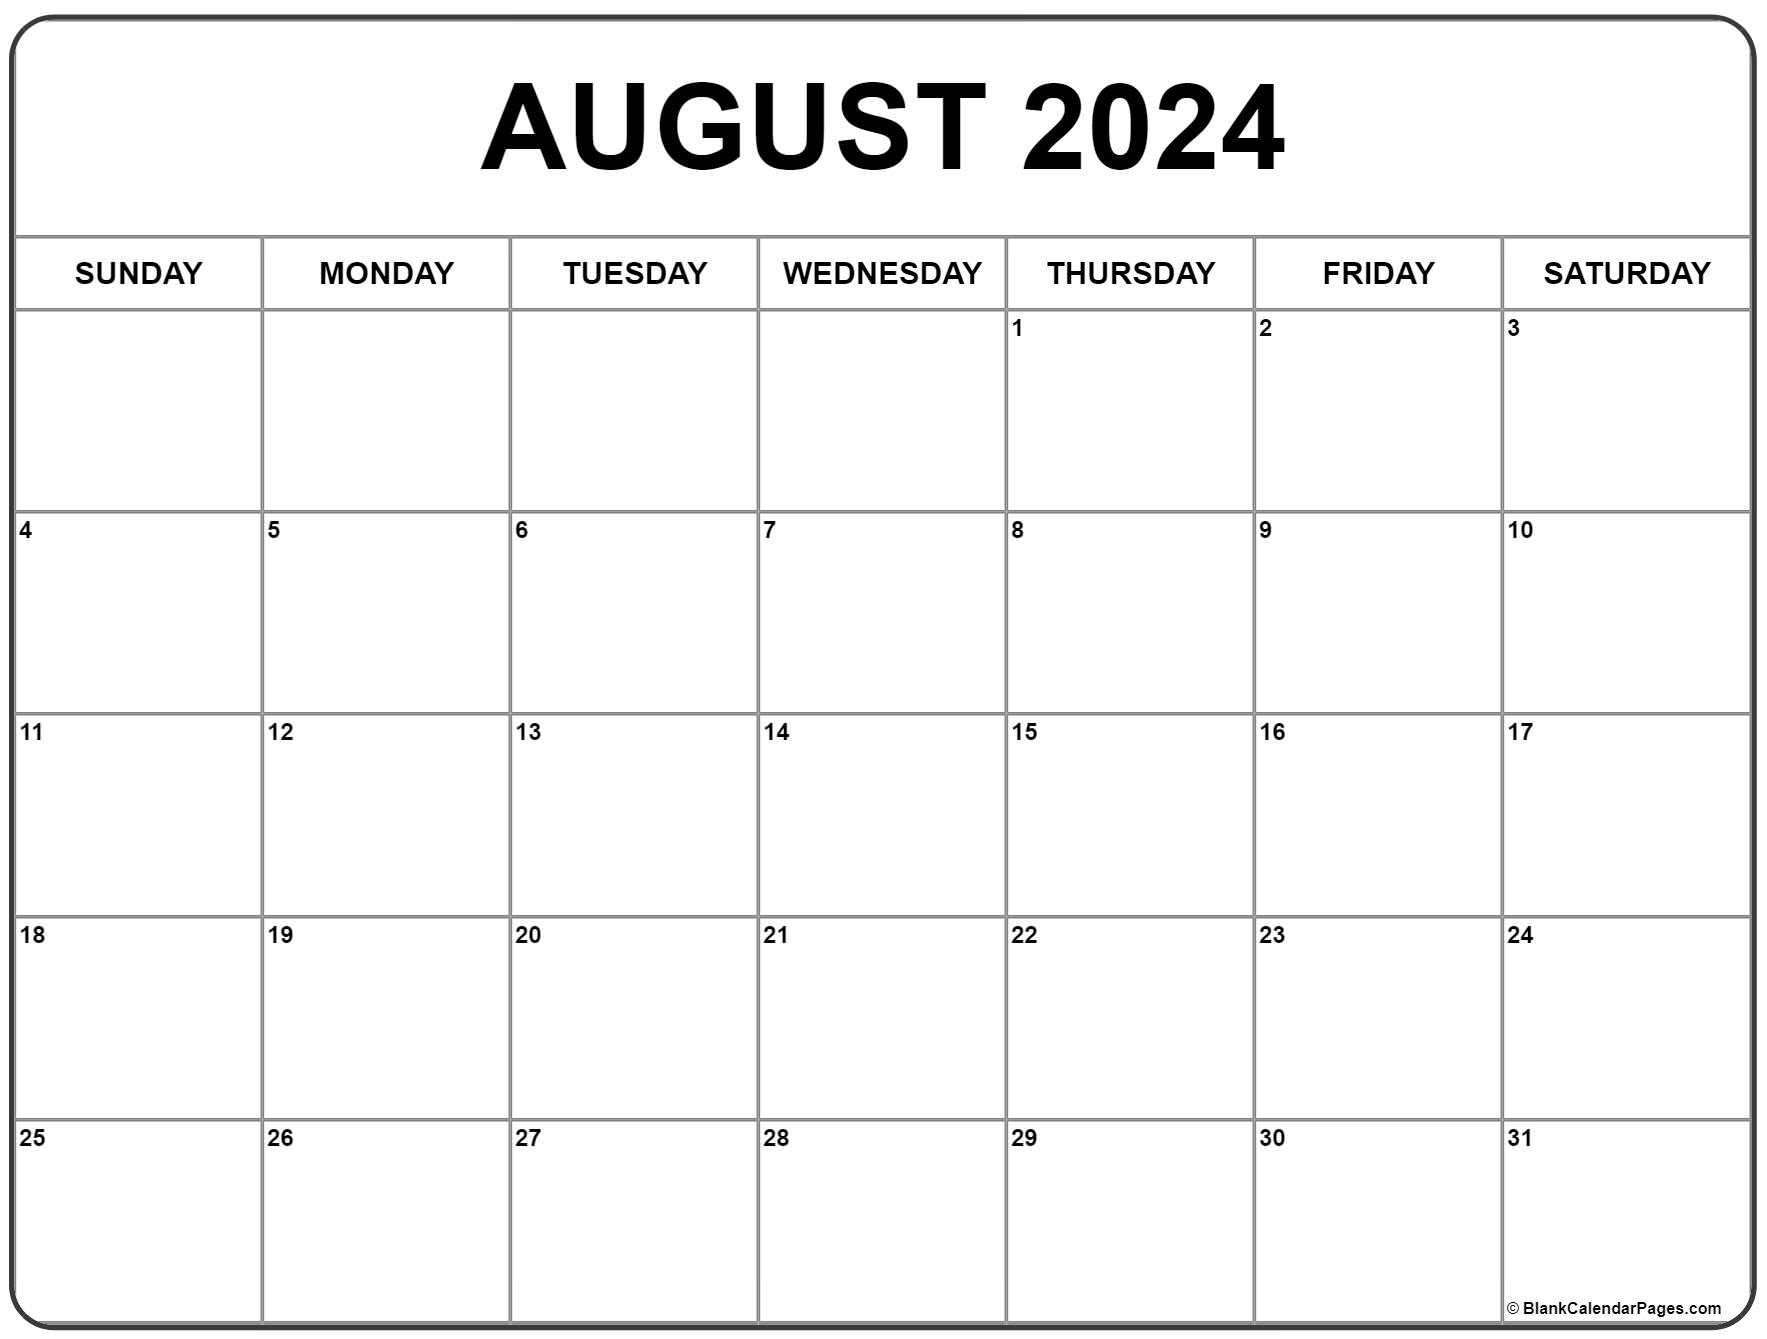 August 2024 Calendar | Free Printable Calendar for Calendar August 2024 Printable Free